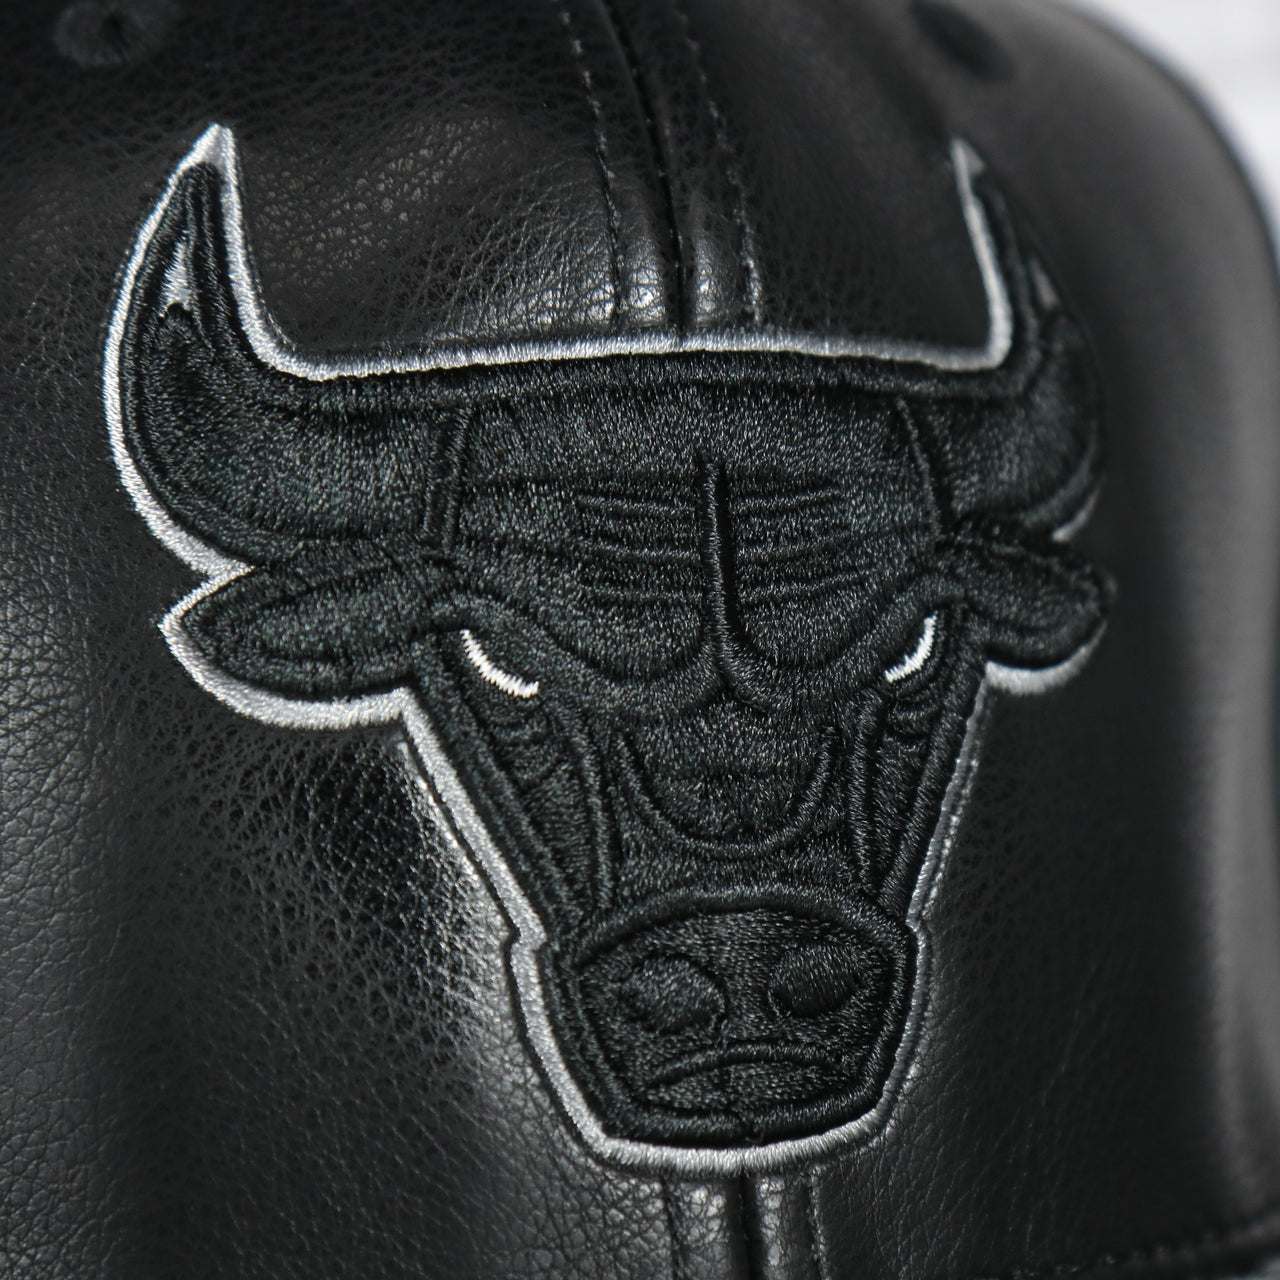 Chicago Bulls Day One Sneaker Hookup Black bottom Two-Tone | Black/Grey Snapback Hat